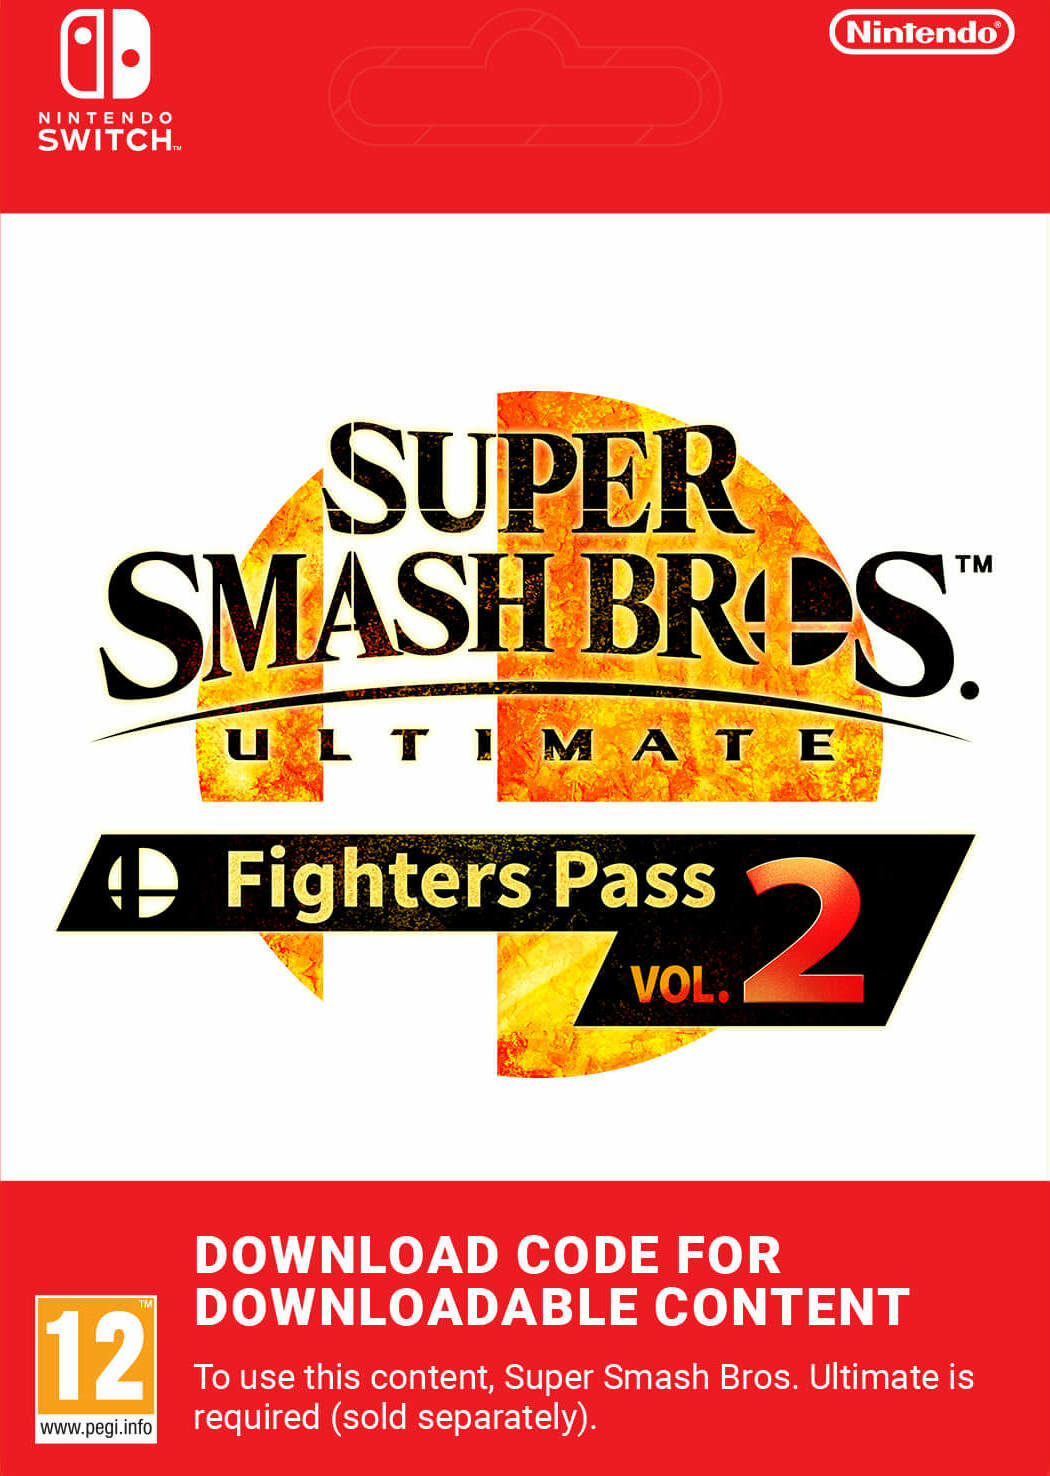 nintendo switch super smash bros ultimate price